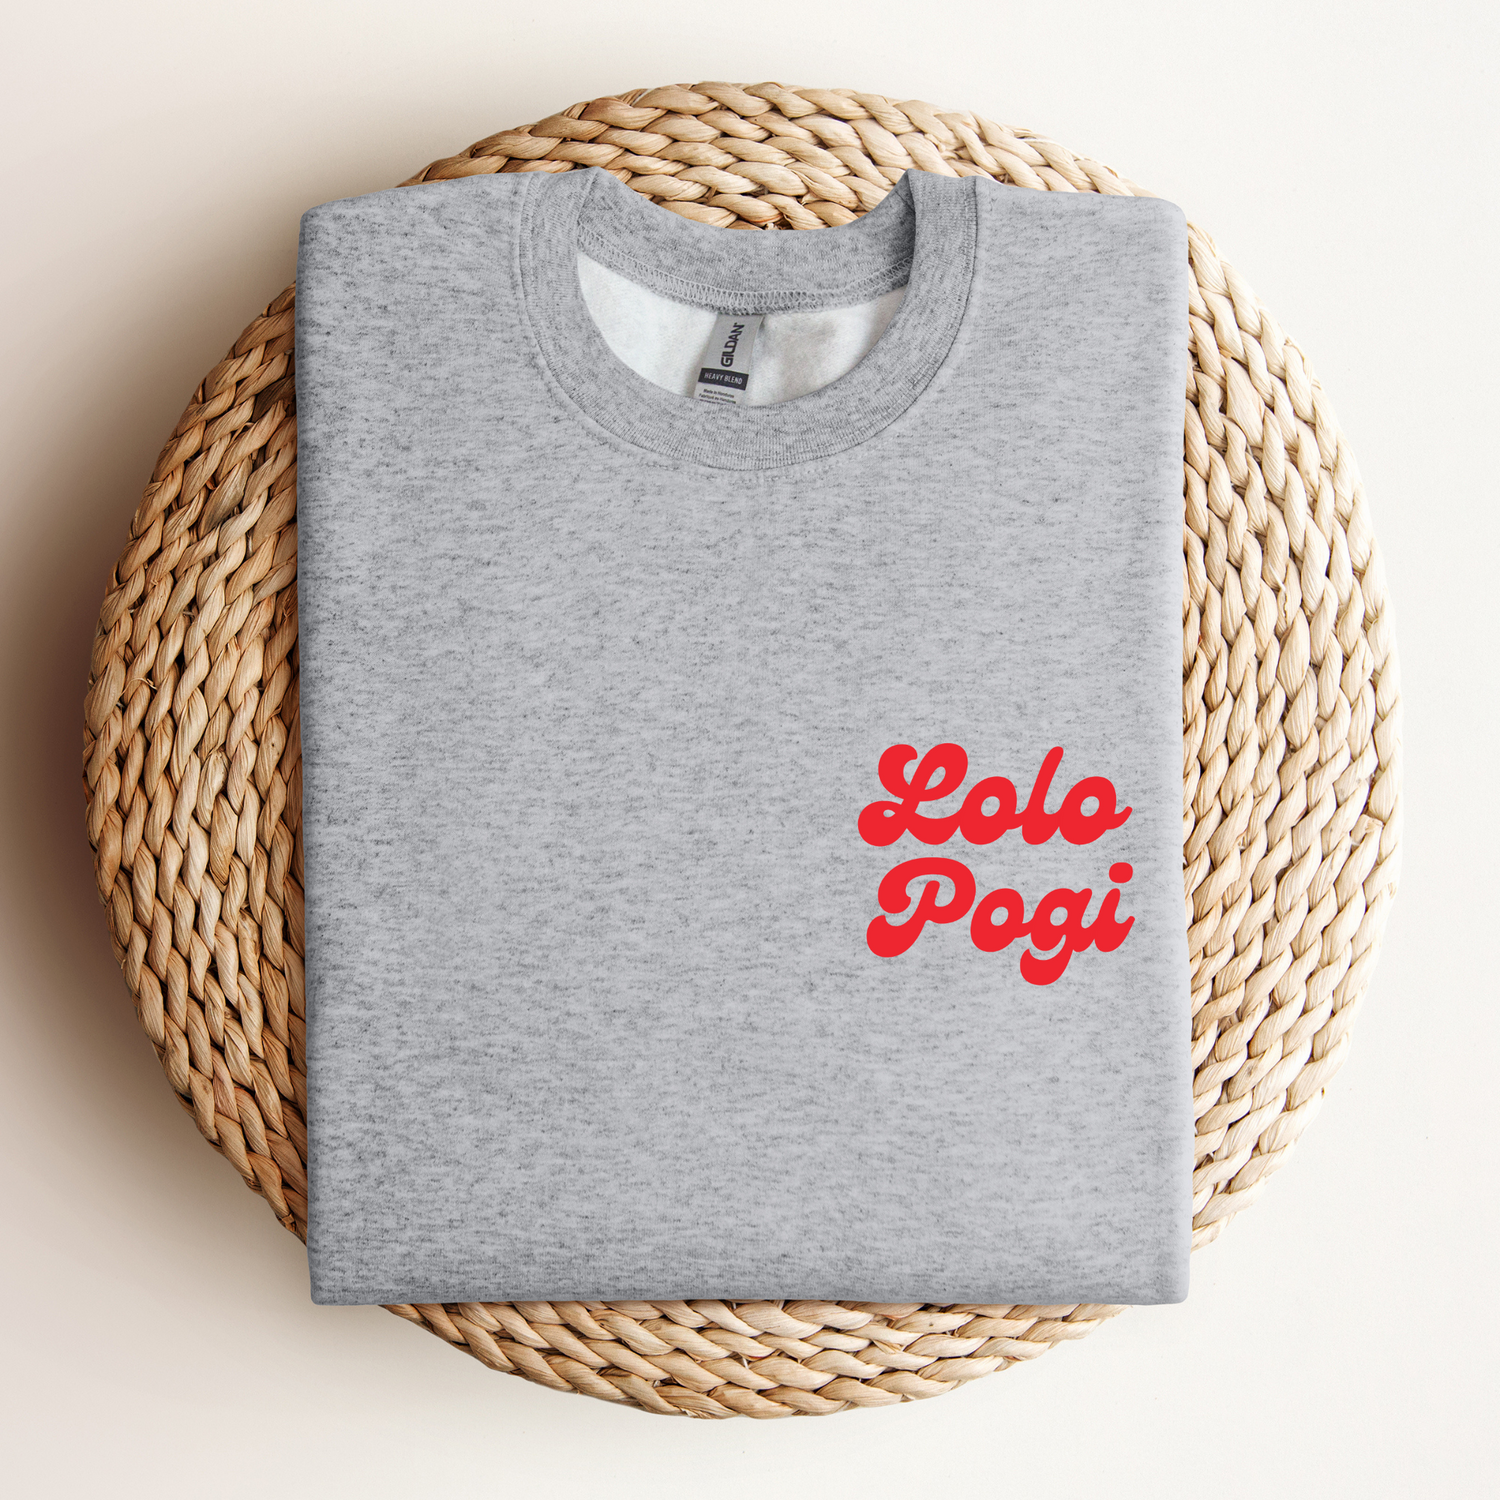 Filipino Sweatshirt Crew Neck Lolo Pogi Grandfather Embroidered Father's Day Gift Image 2